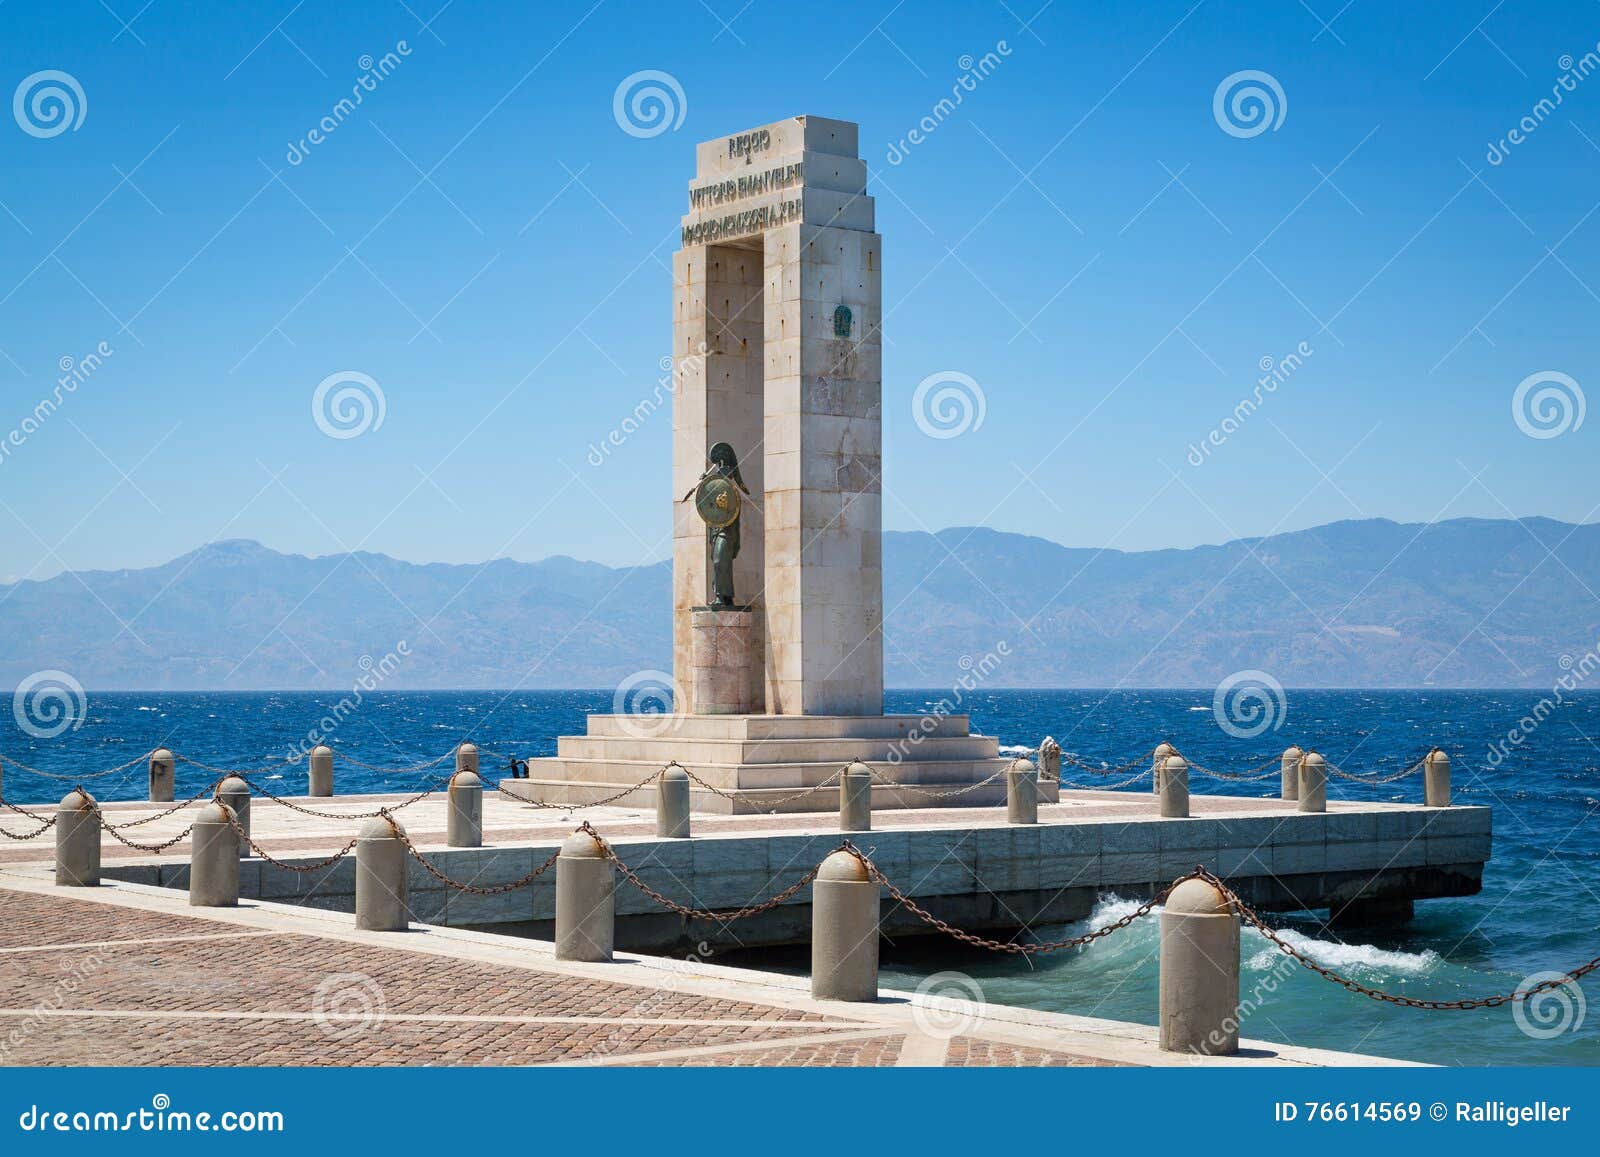 monument on the lungomare, reggio calabria, italy